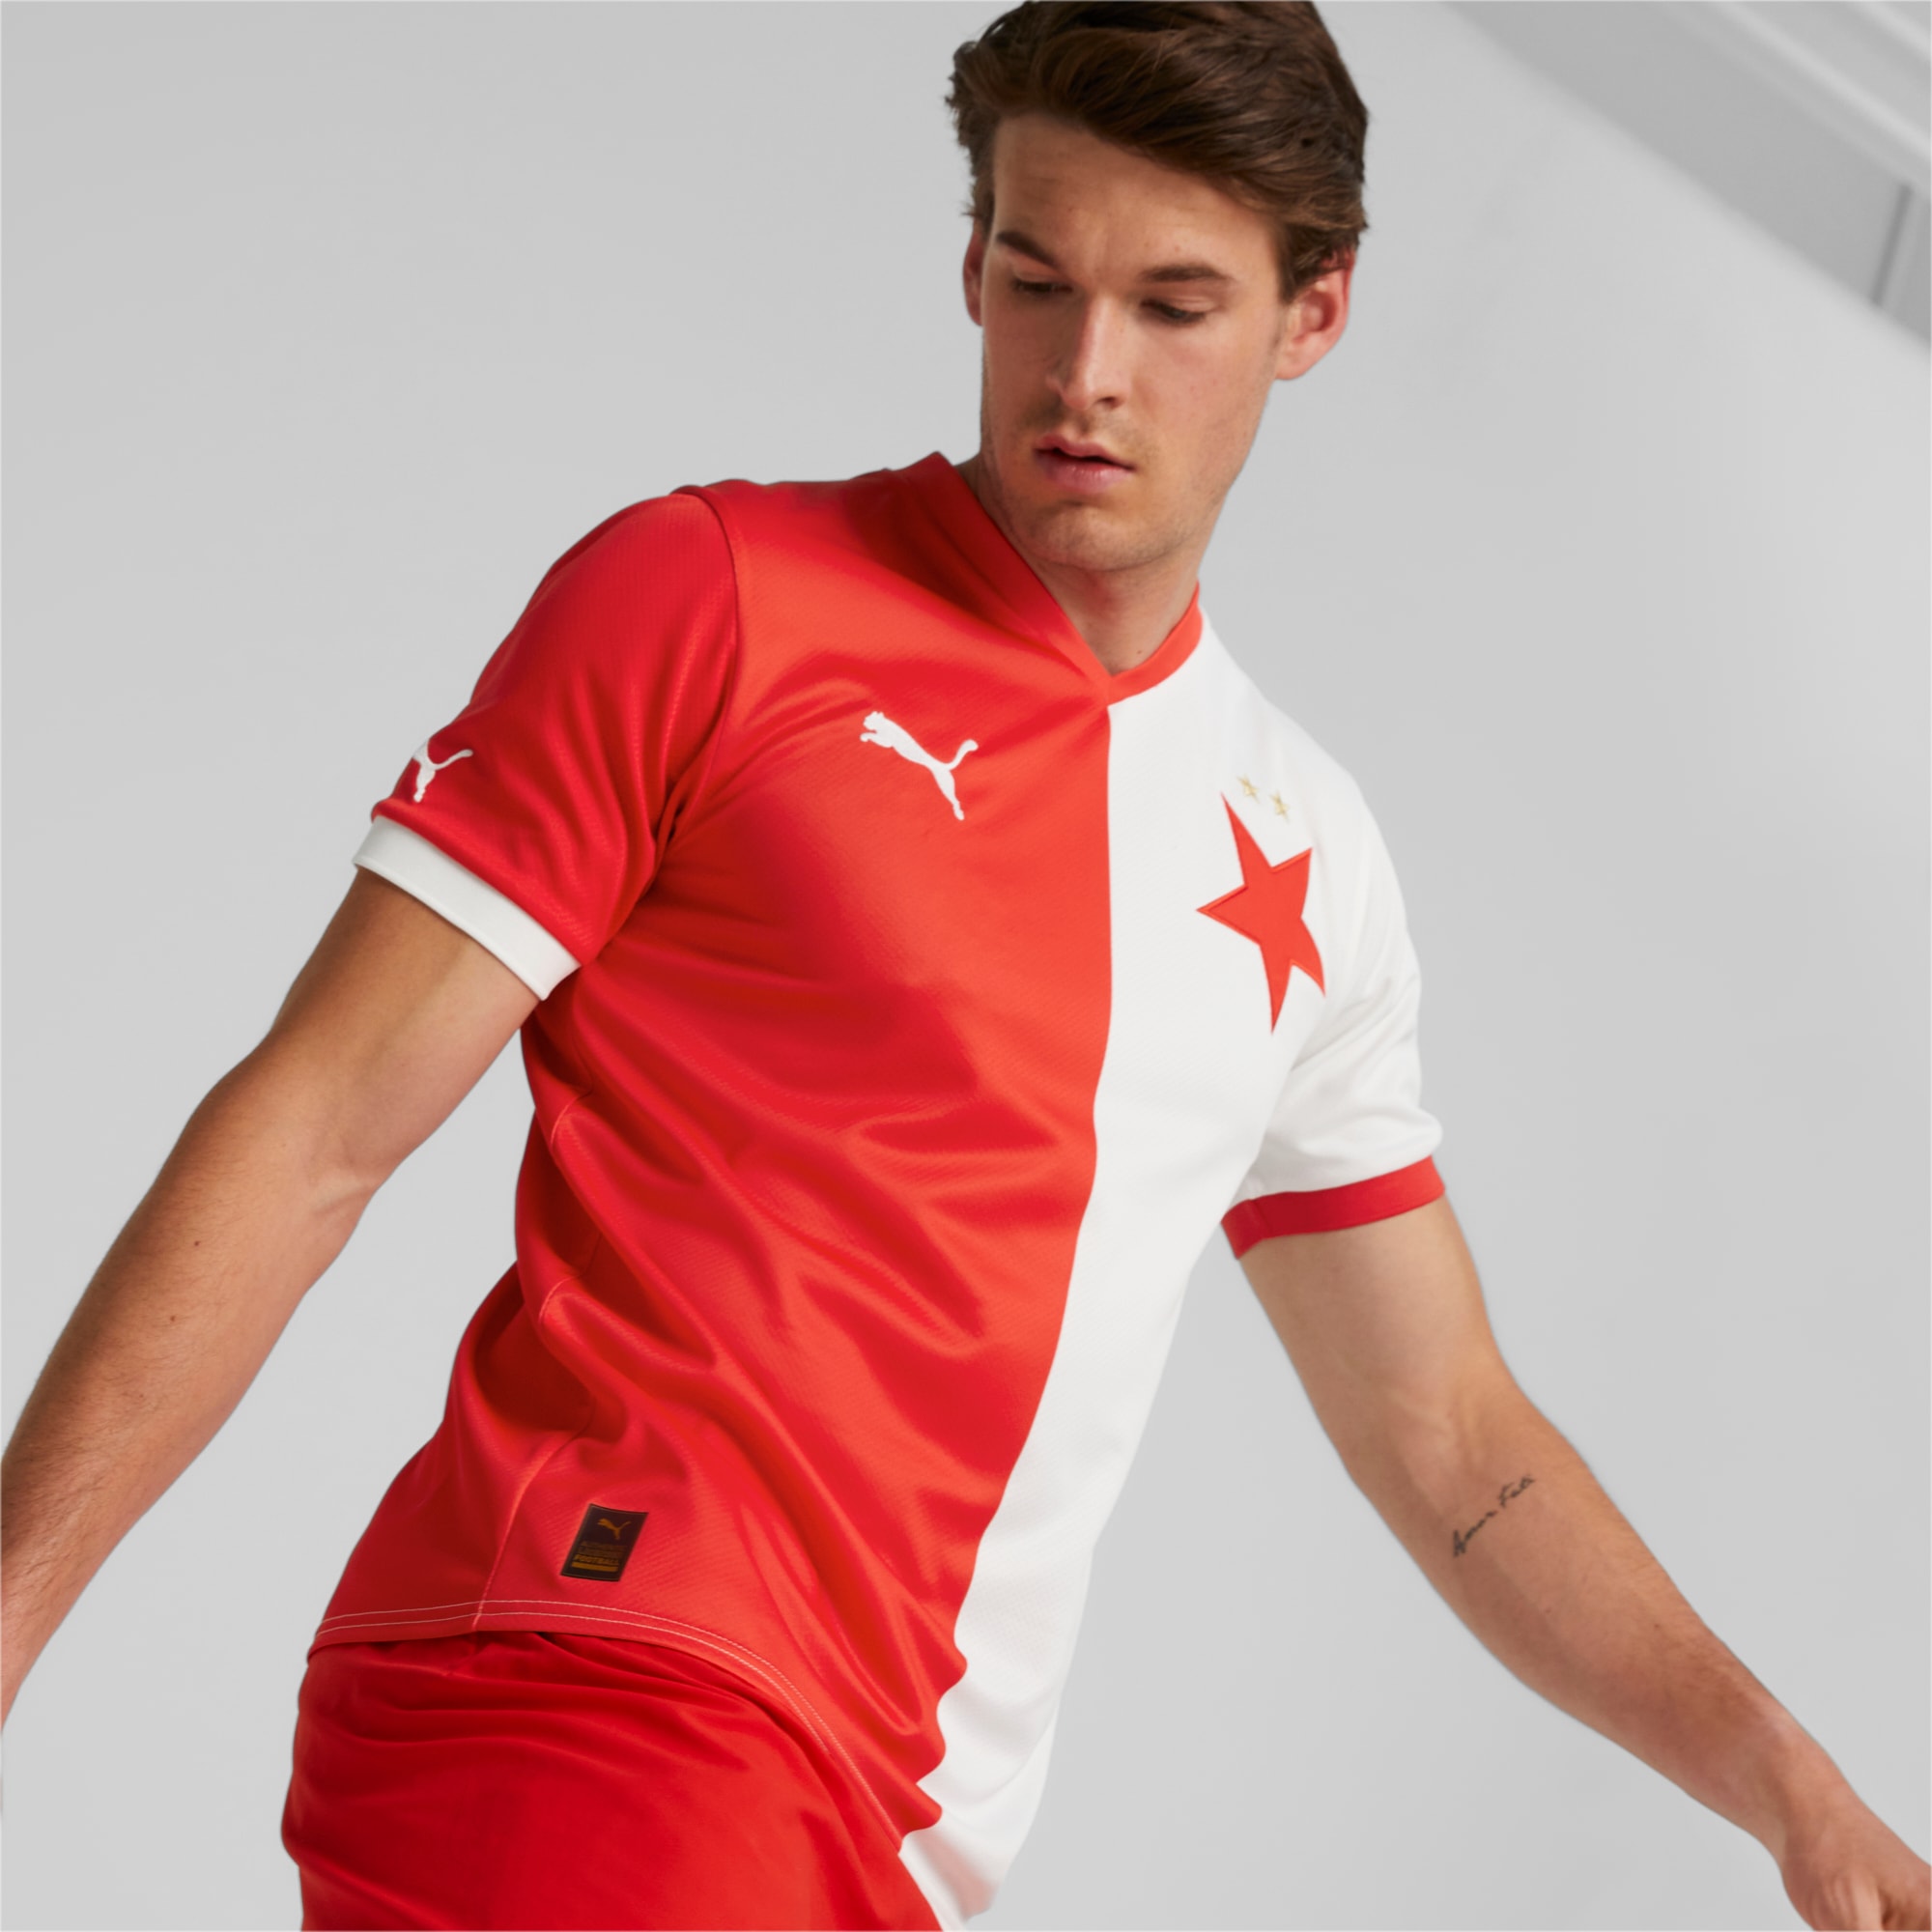 Slavia Prague 2022-23 Puma Home Kit - Football Shirt Culture - Latest  Football Kit News and More